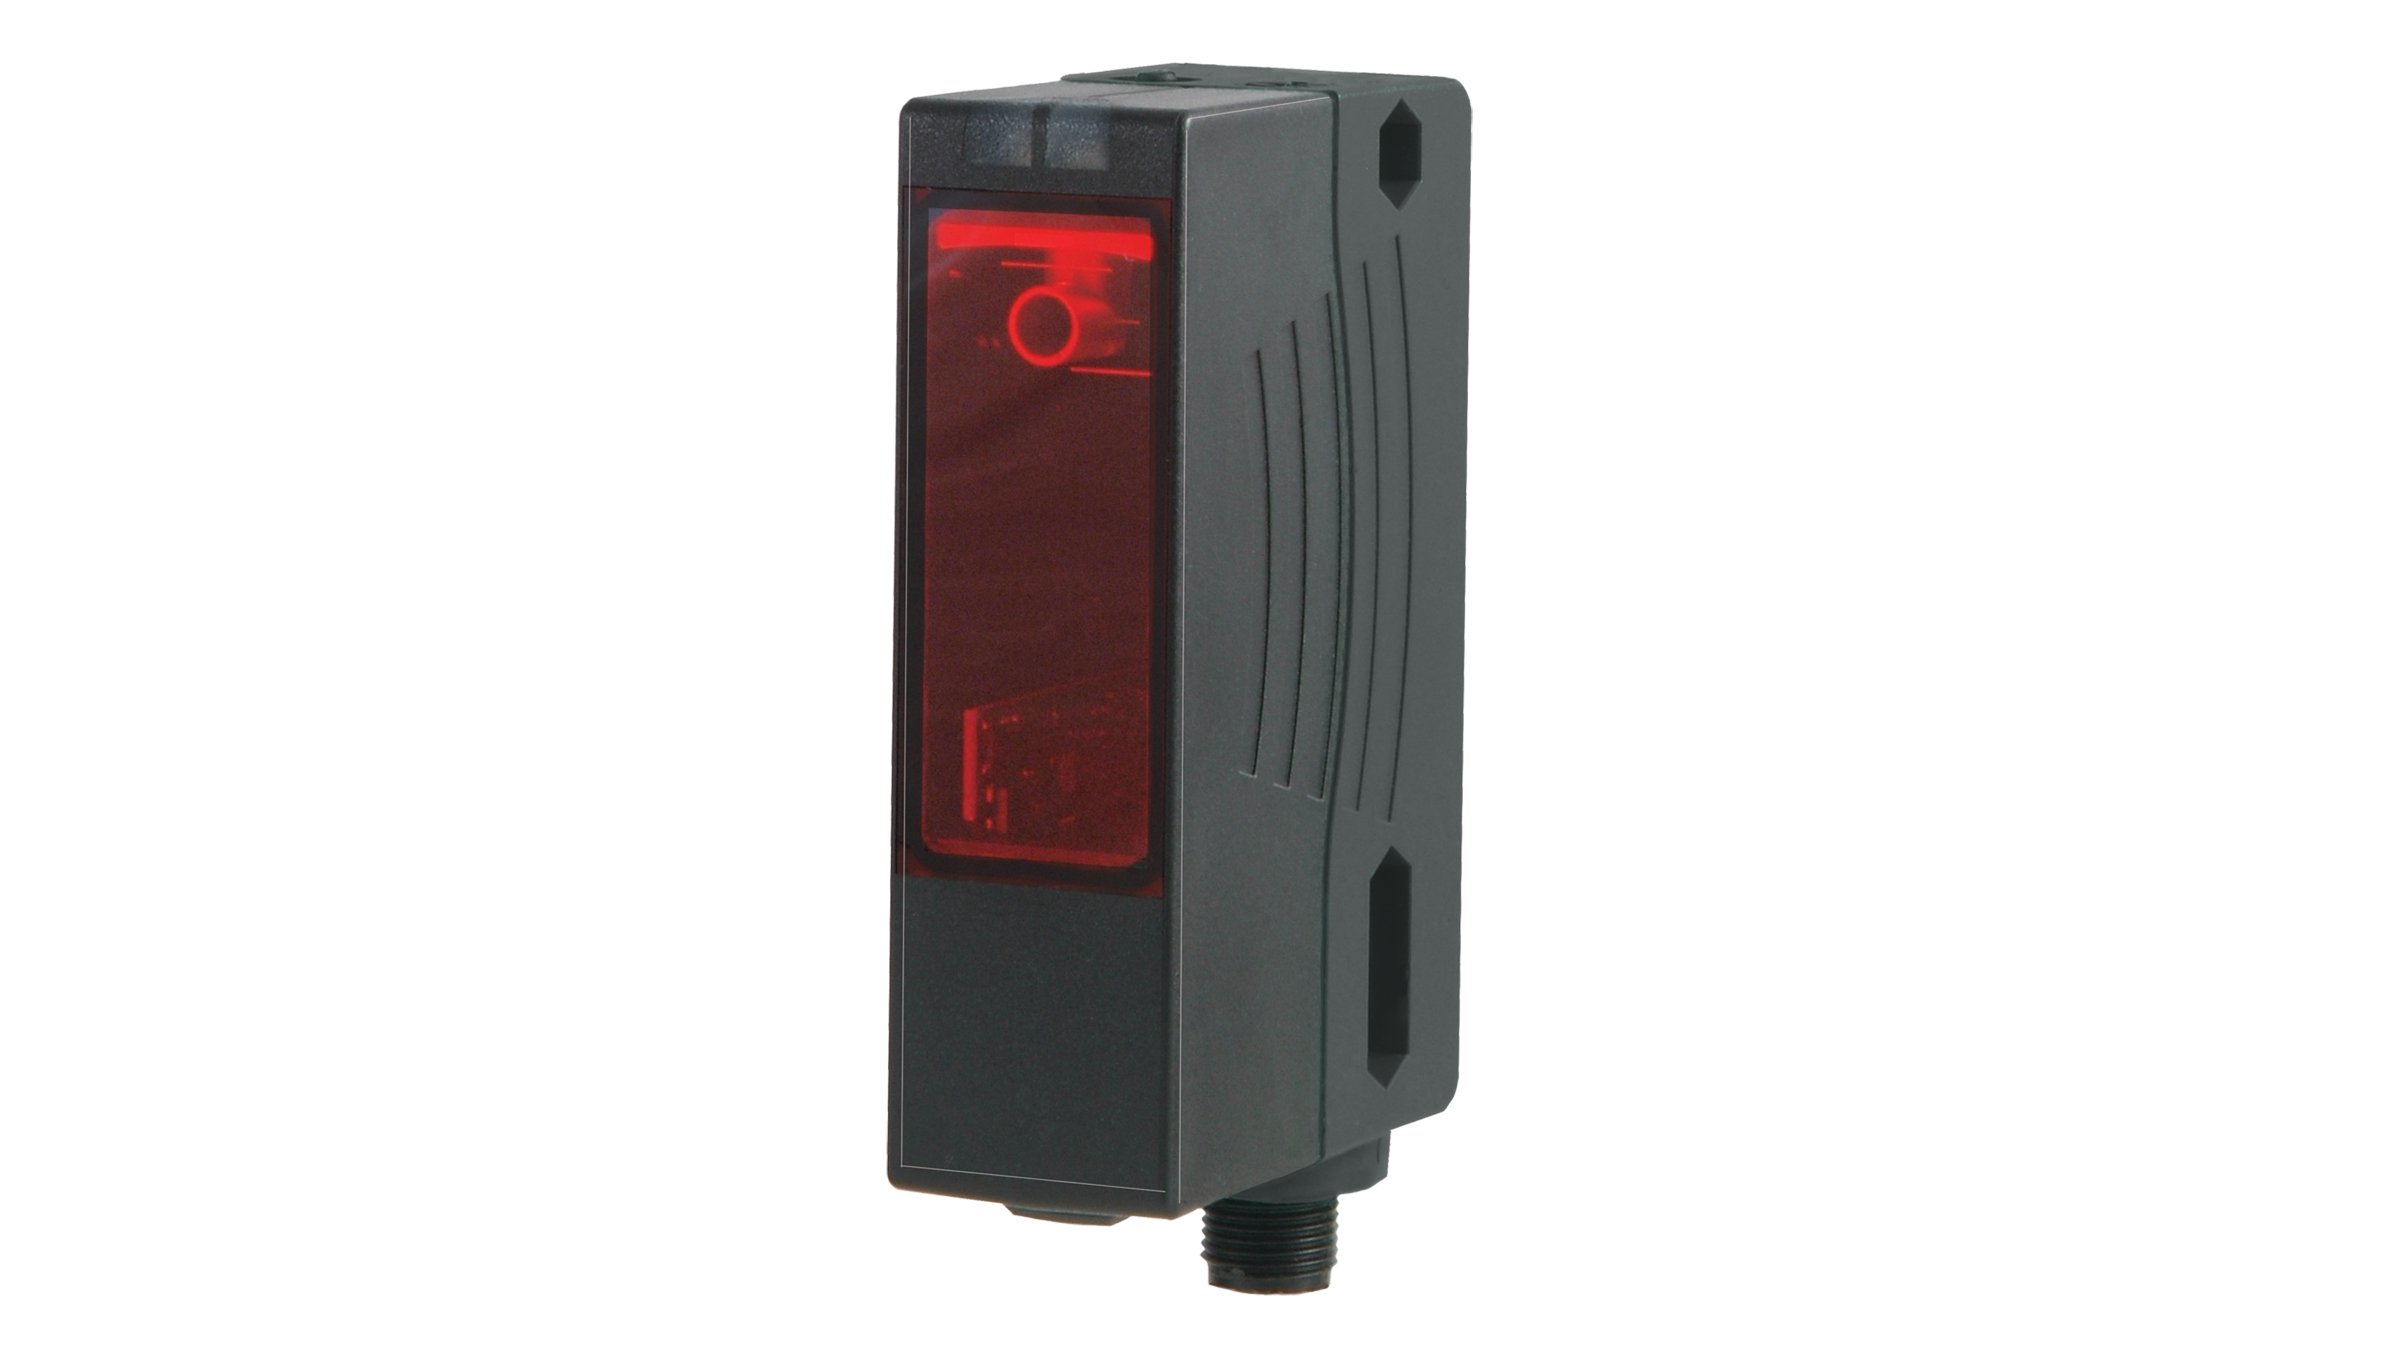 Black Allen-Bradley rectangular sensor with a red lens.